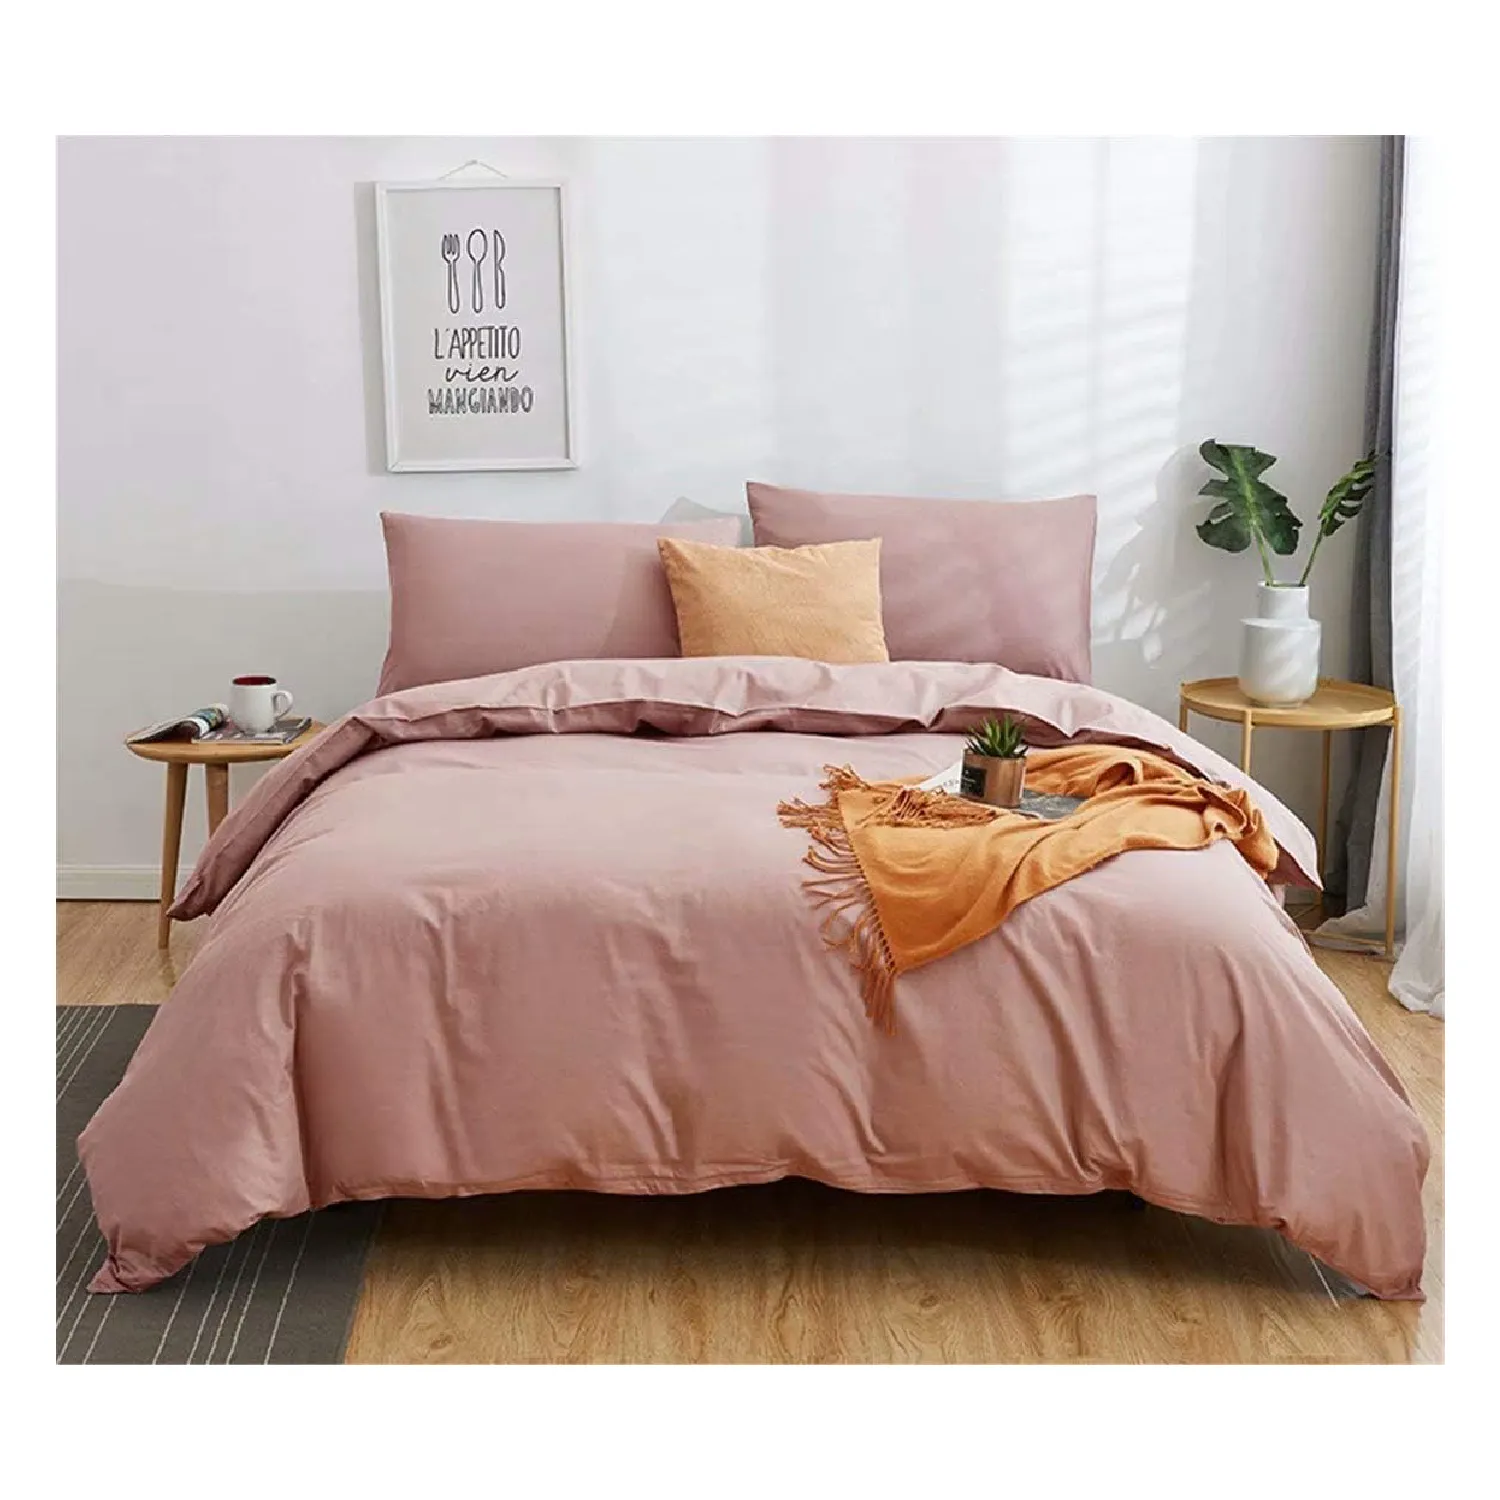 Seprai tempat tidur cetakan poliester ramah kulit Set seprai kamar tidur kualitas tinggi tirai yang cocok untuk rumah